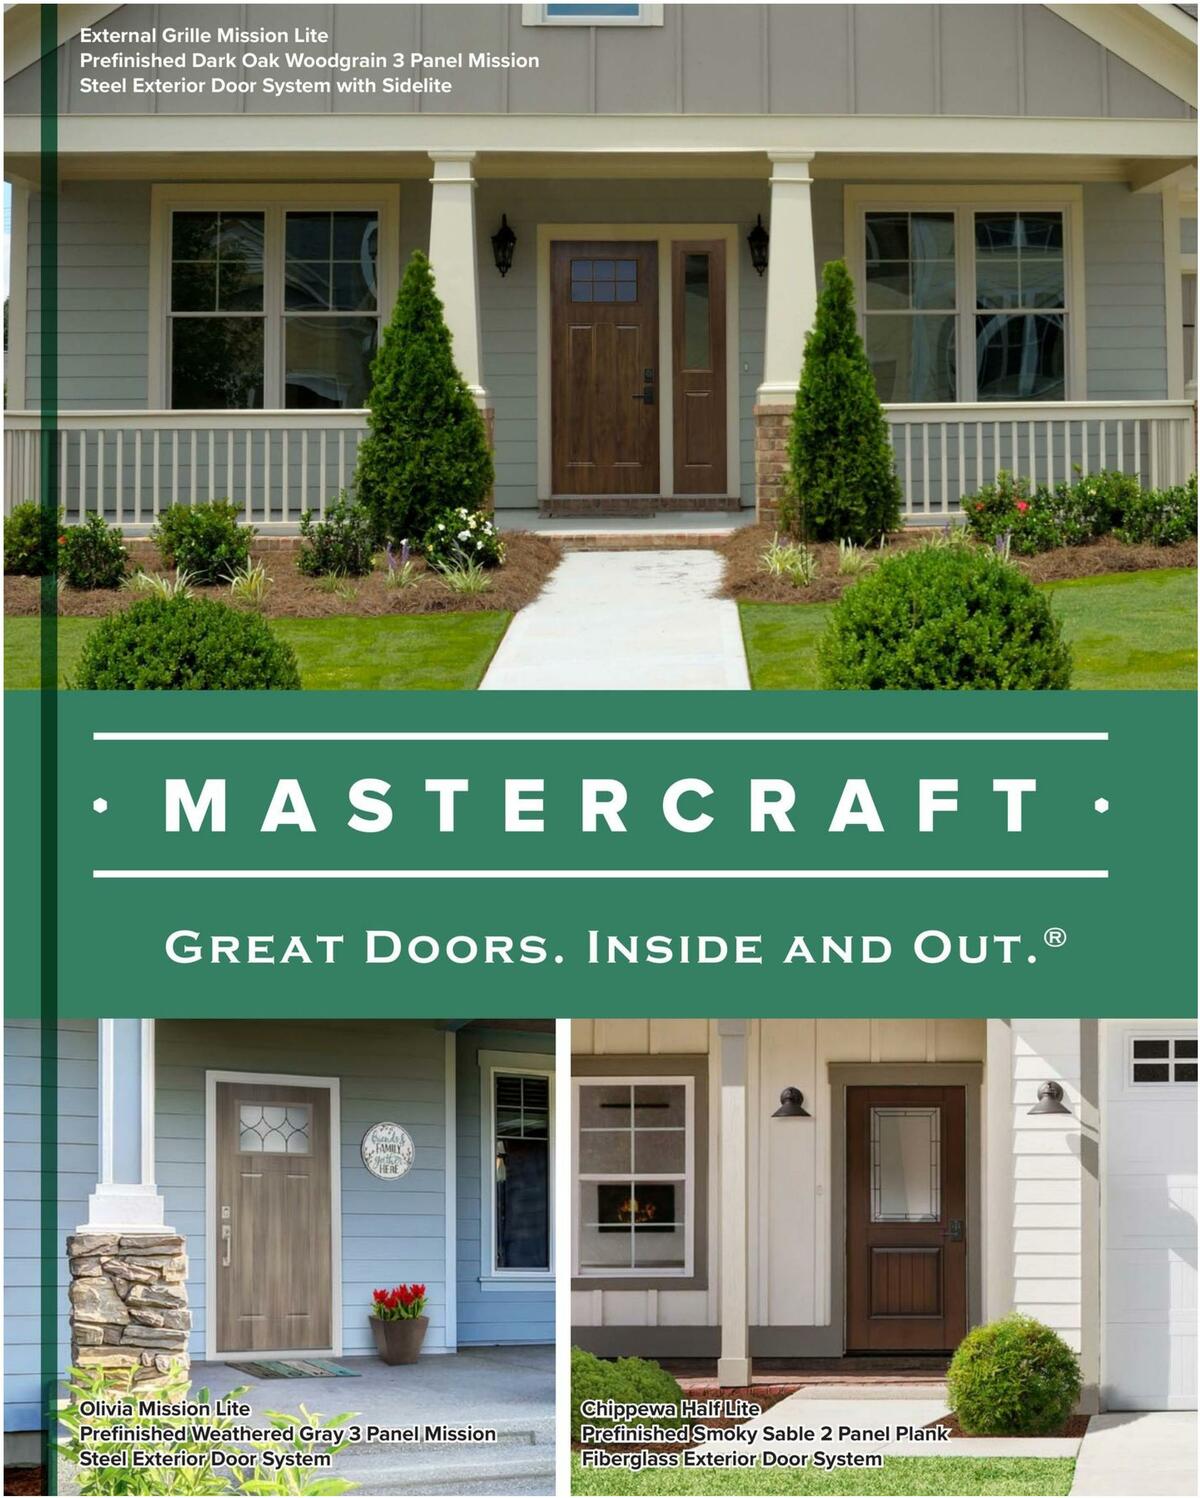 Menards Mastercraft 2022 Exterior Door Trends Weekly Ad from November 1